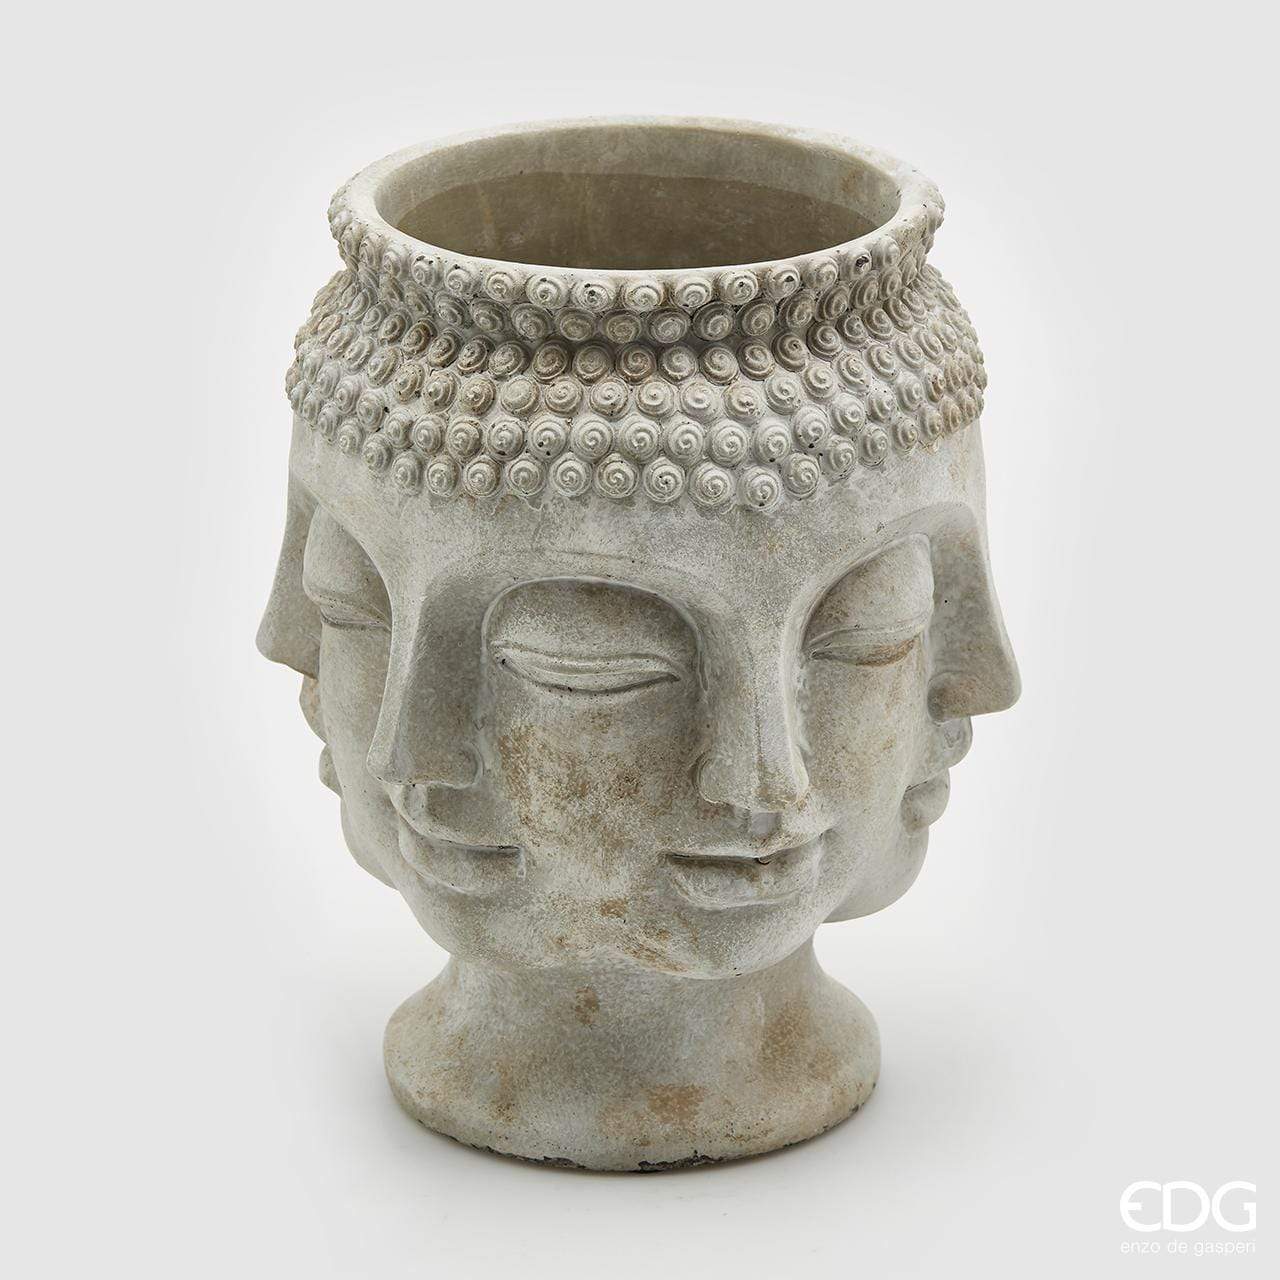 Vase - Zement cm 25 20/18 Höhe cm Ø hellgrau Buddha Köpfe